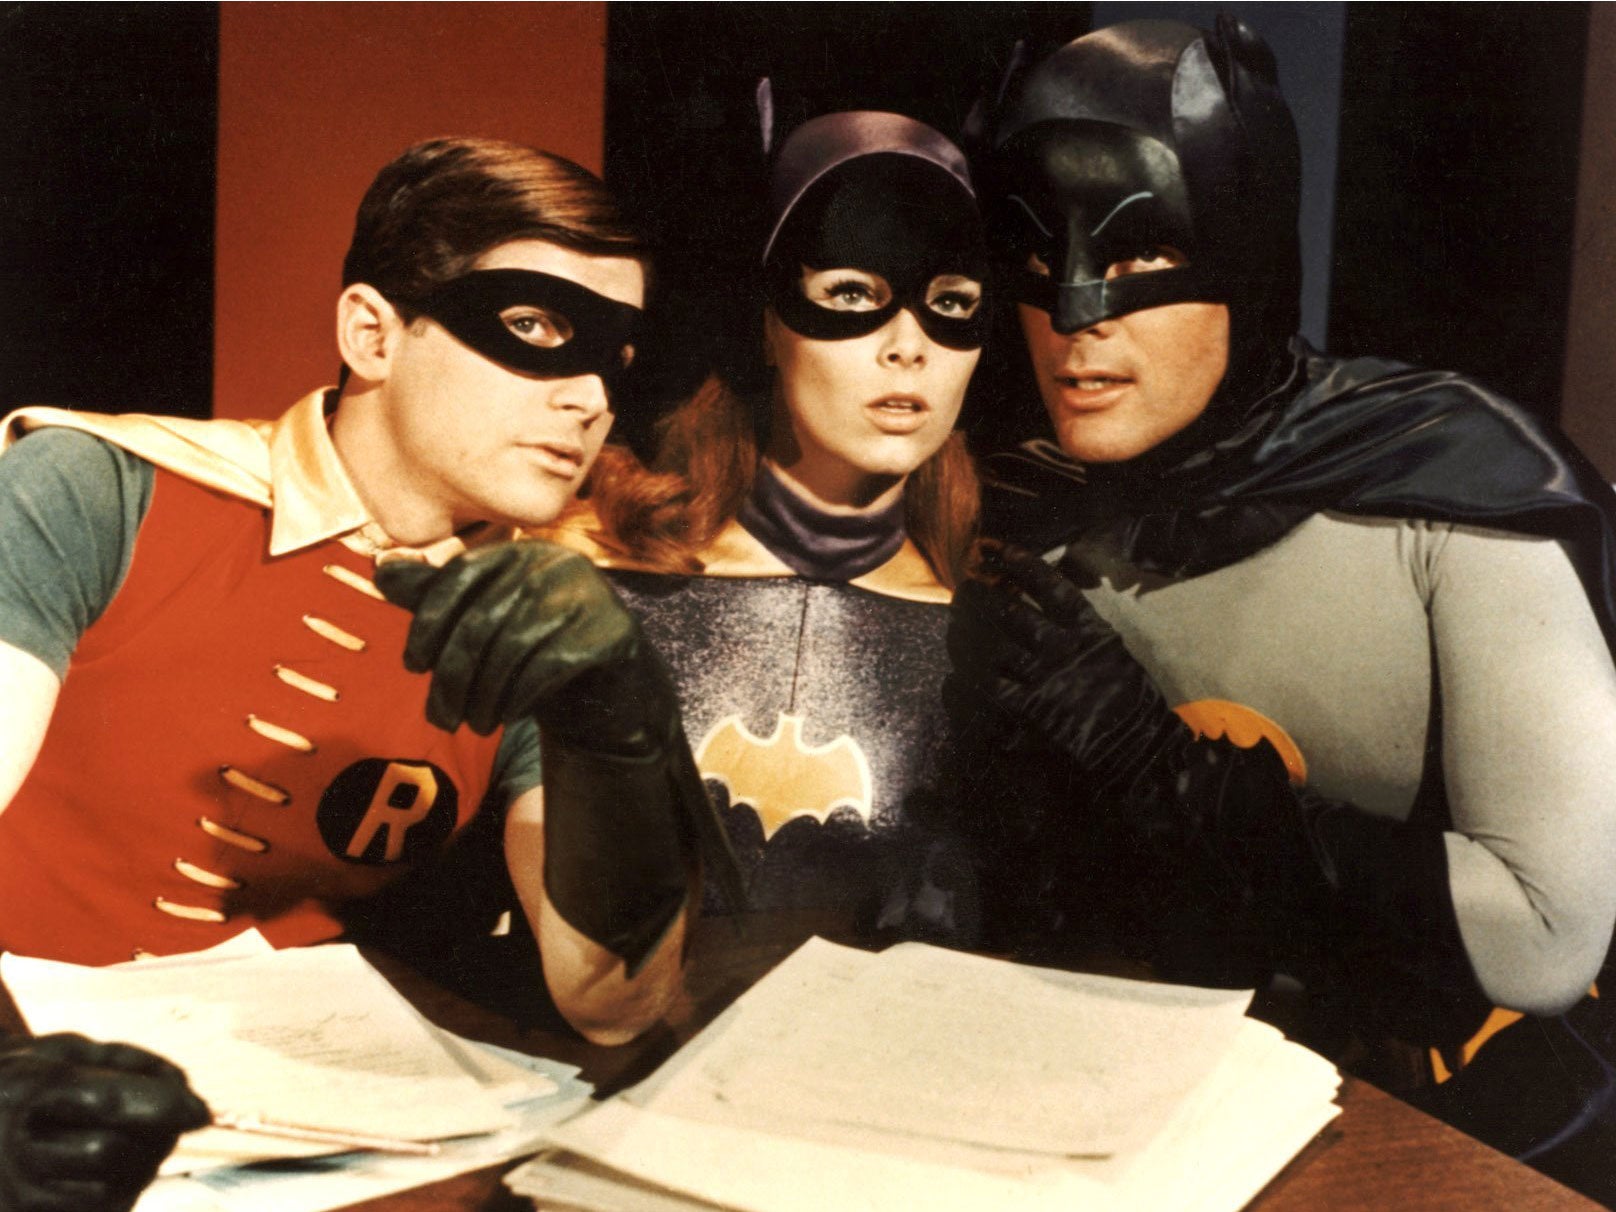 Yvonne Craig appeared alongside Burt Ward and Adam West in the Batman TV series